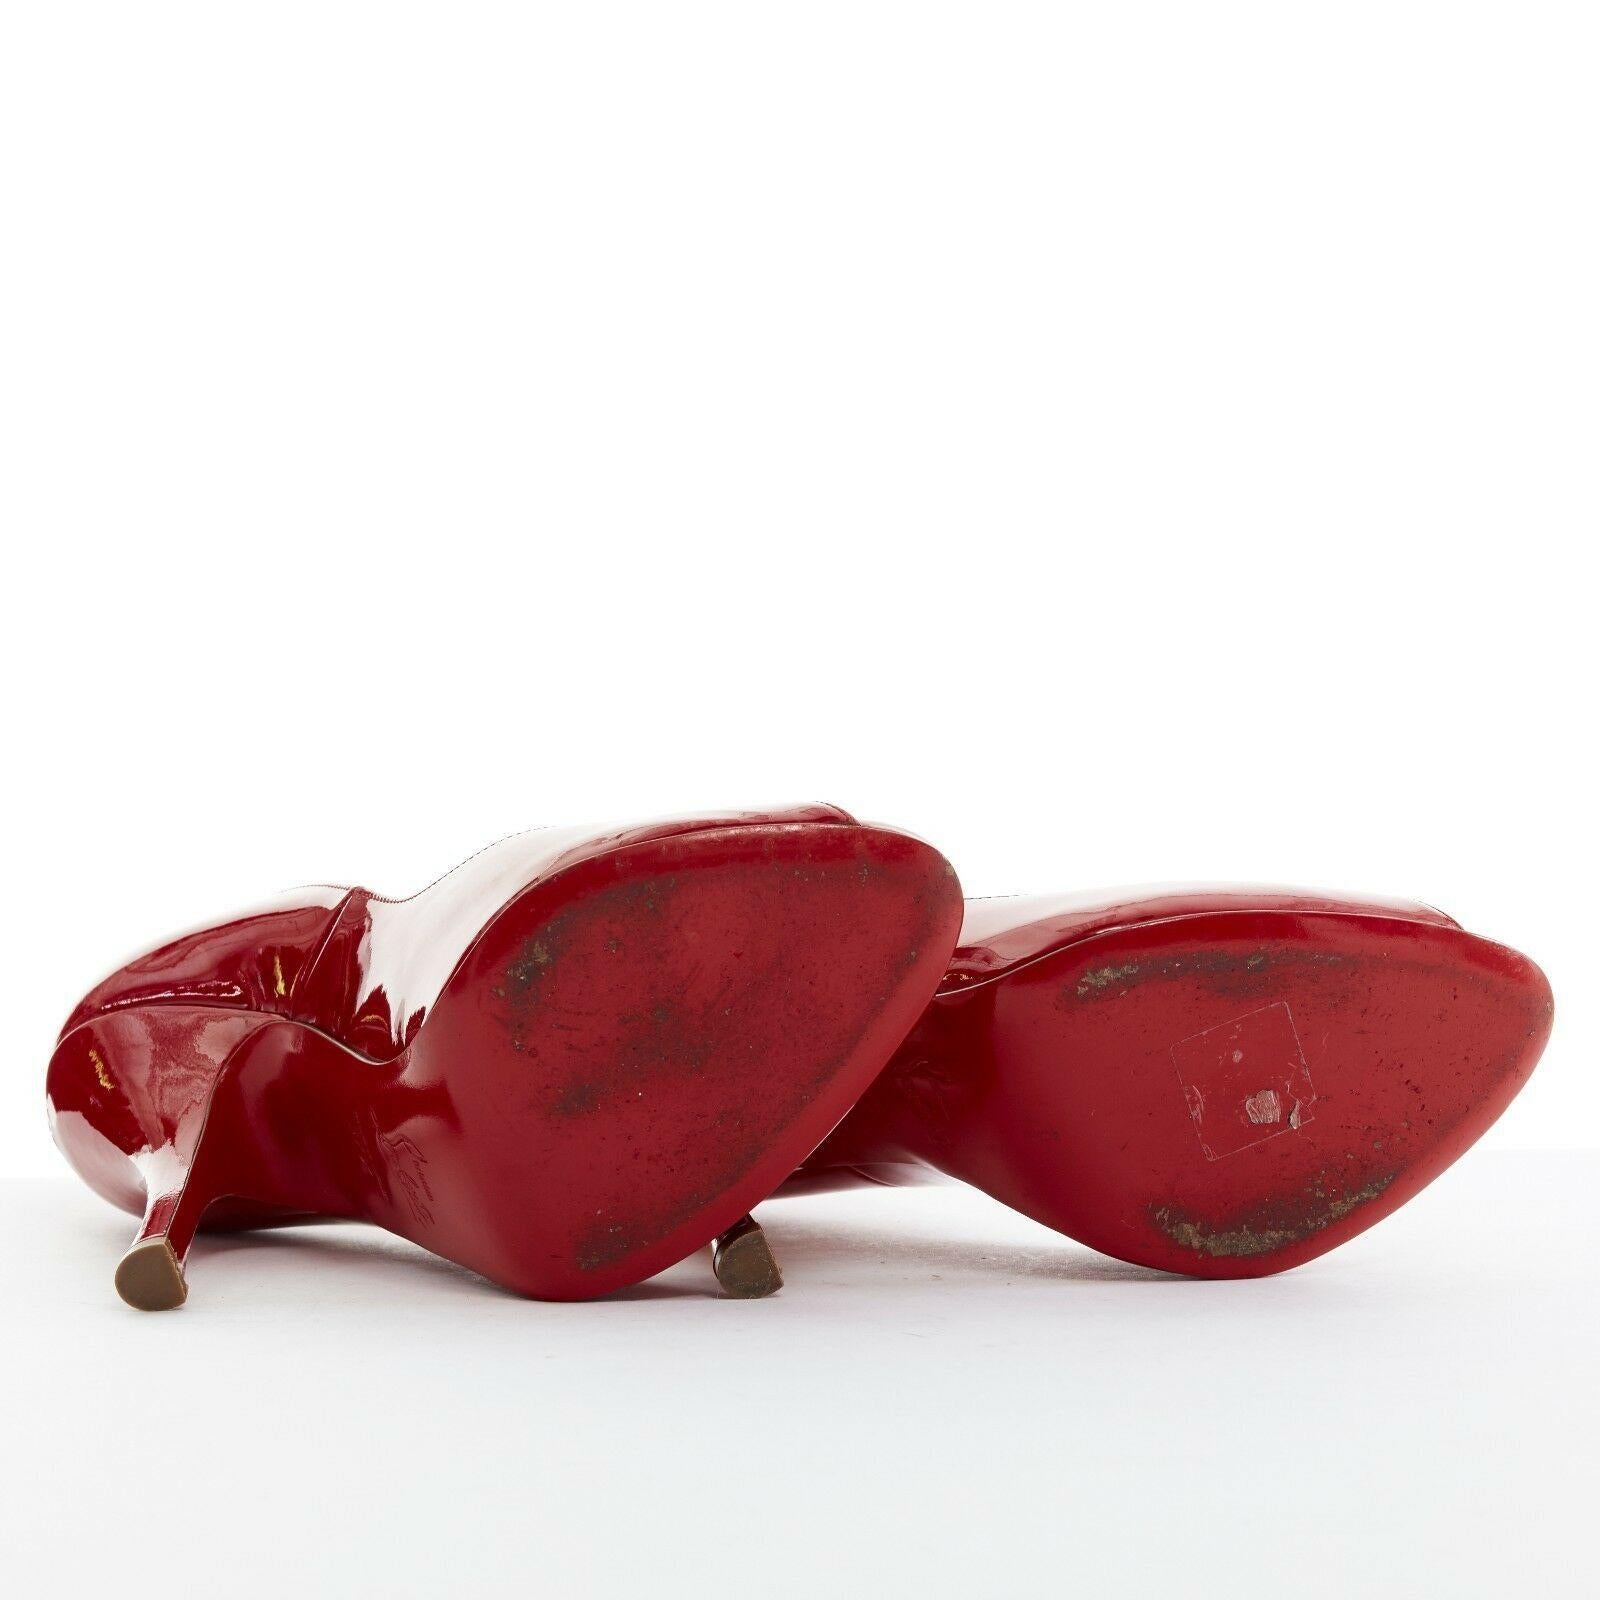 CHRISTIAN LOUBOUTIN Maryl 120 red patent curved heel peeptoe heels EU37.5 US7.5 1